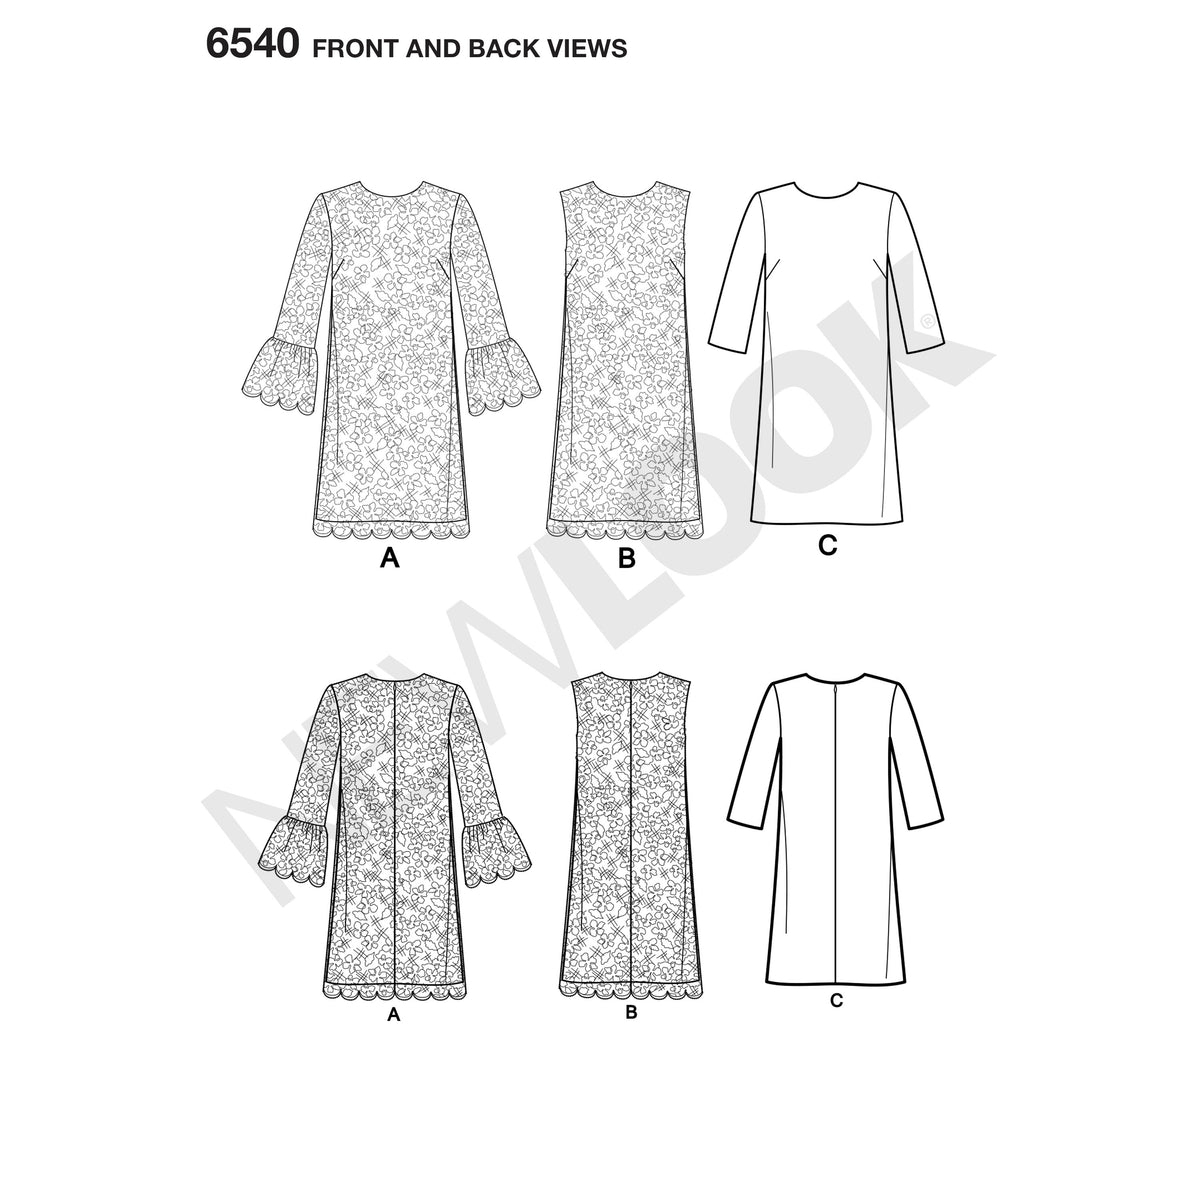 6540 New Look Pattern 6540 Misses' Shift Dress